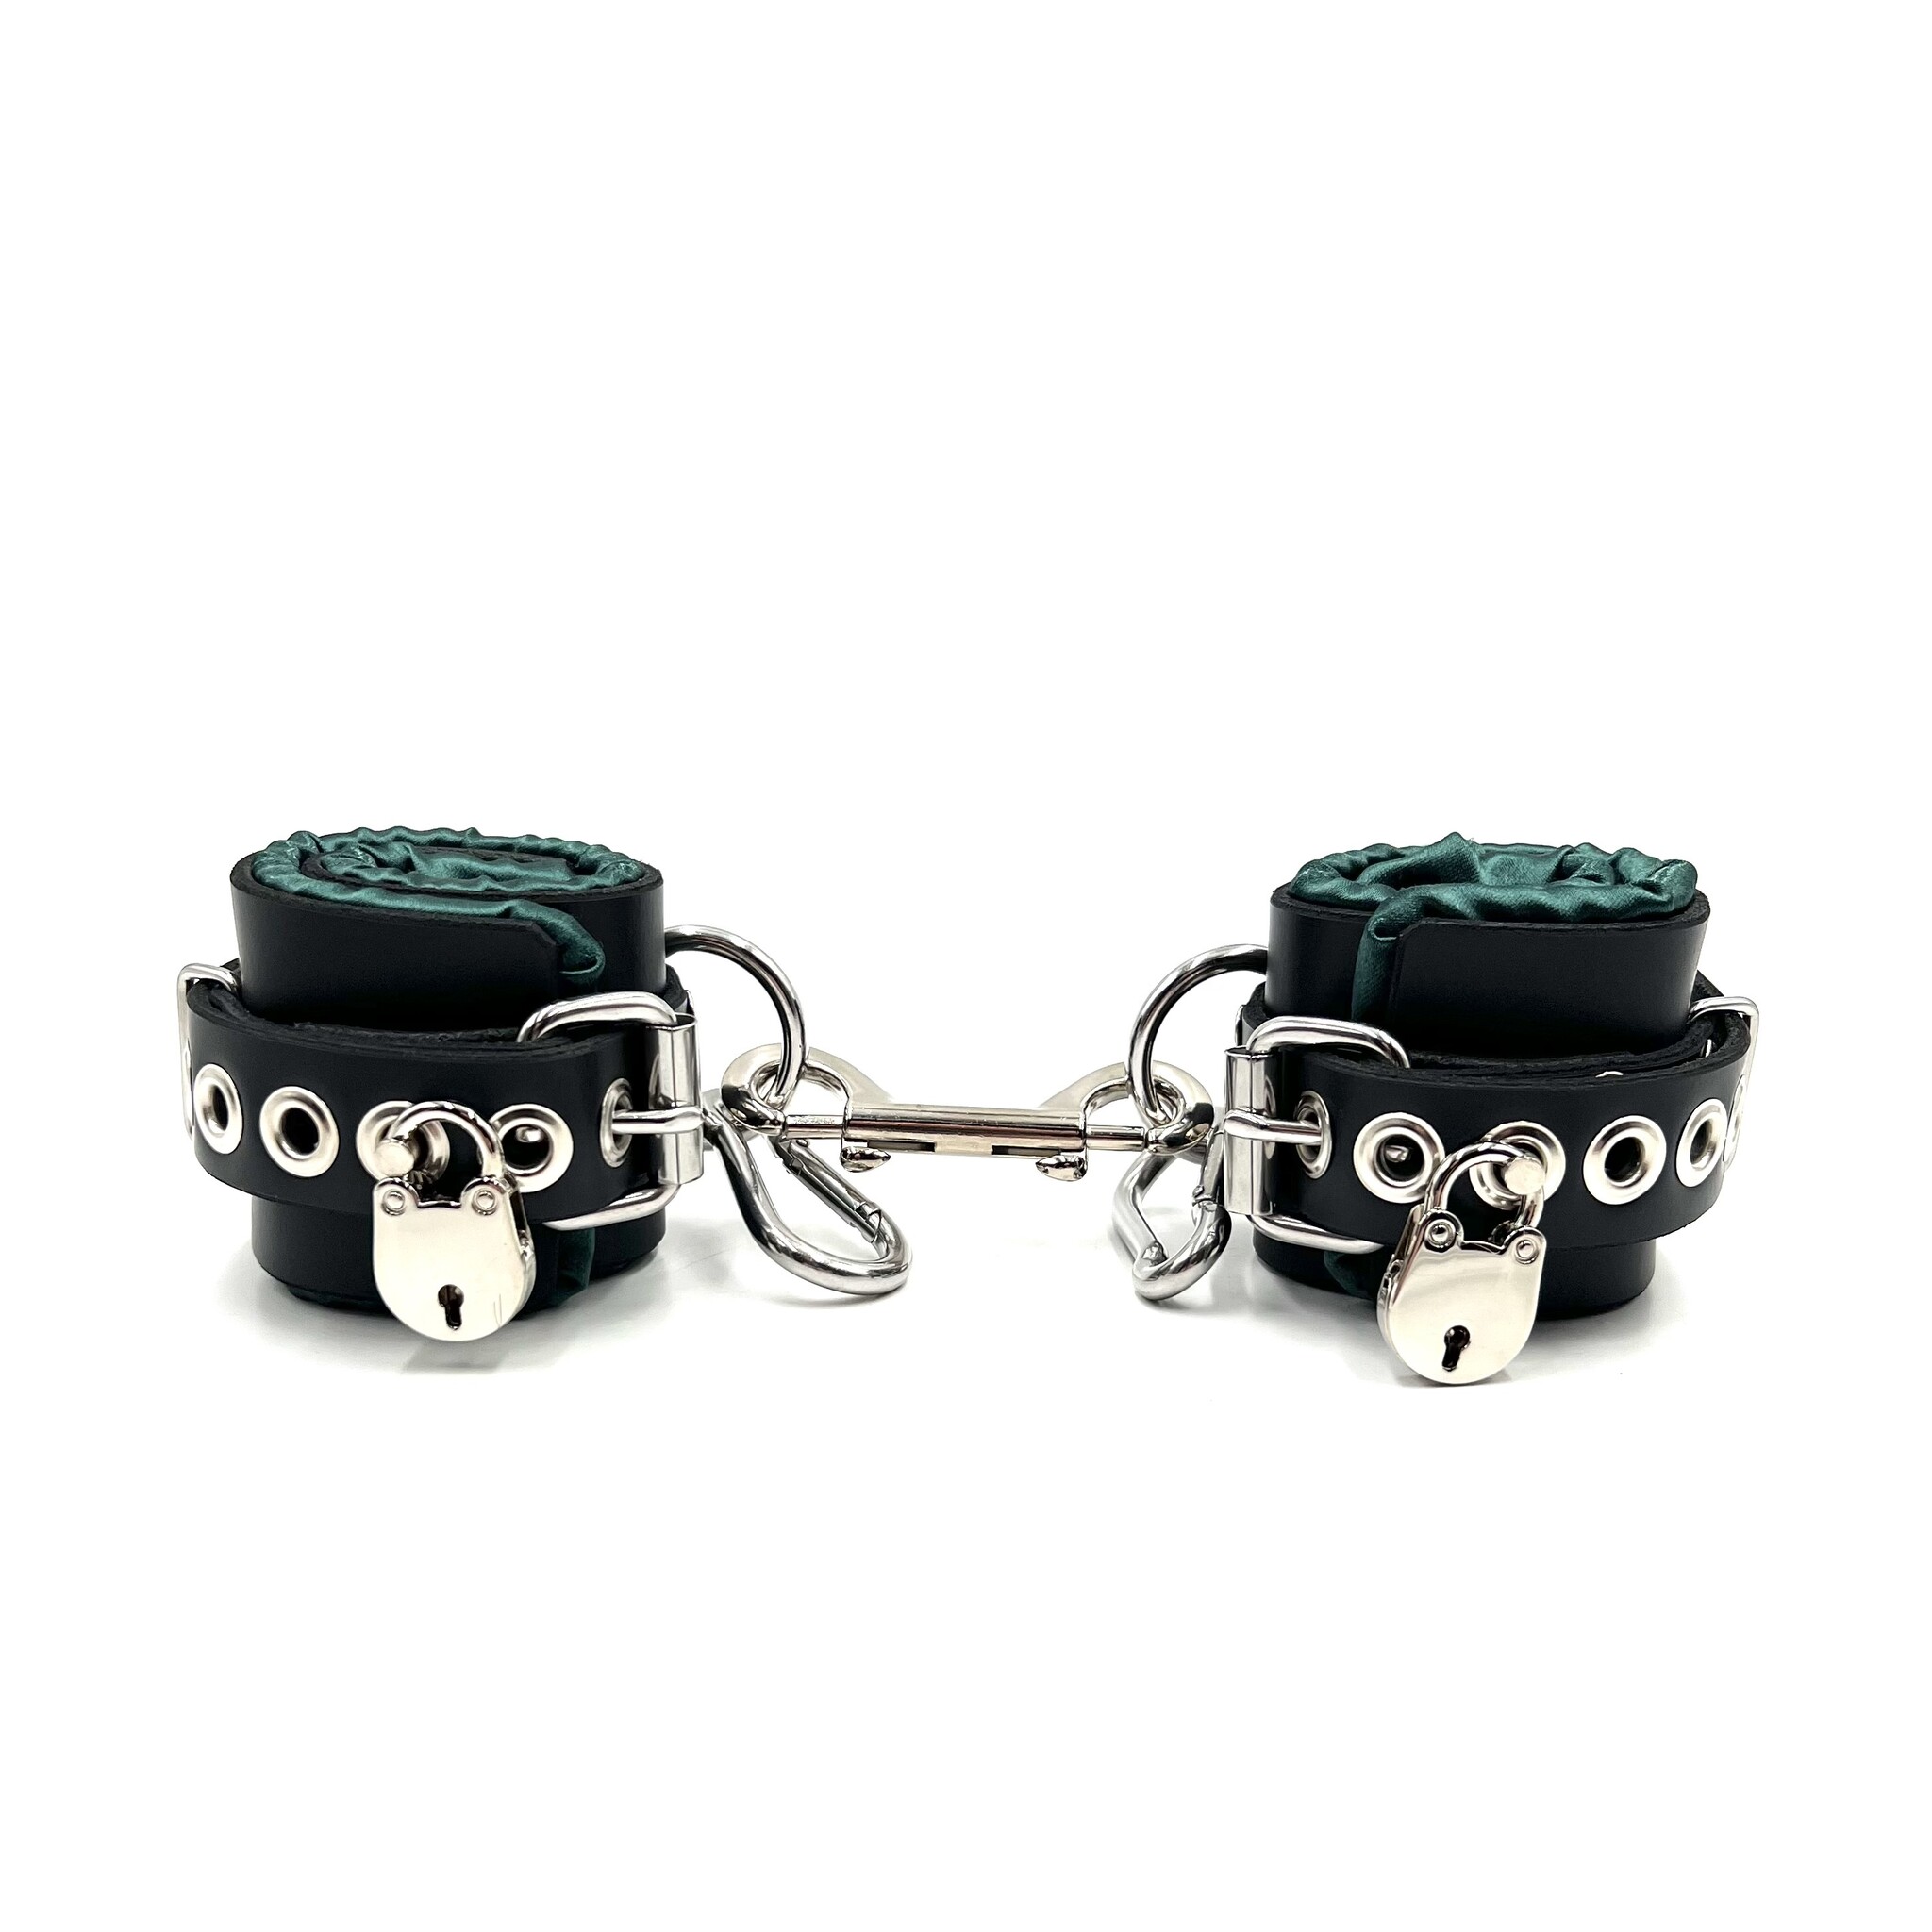 Locking Satin Lined Leather Bondage Wrist Cuffs | Axovus | Bondesque